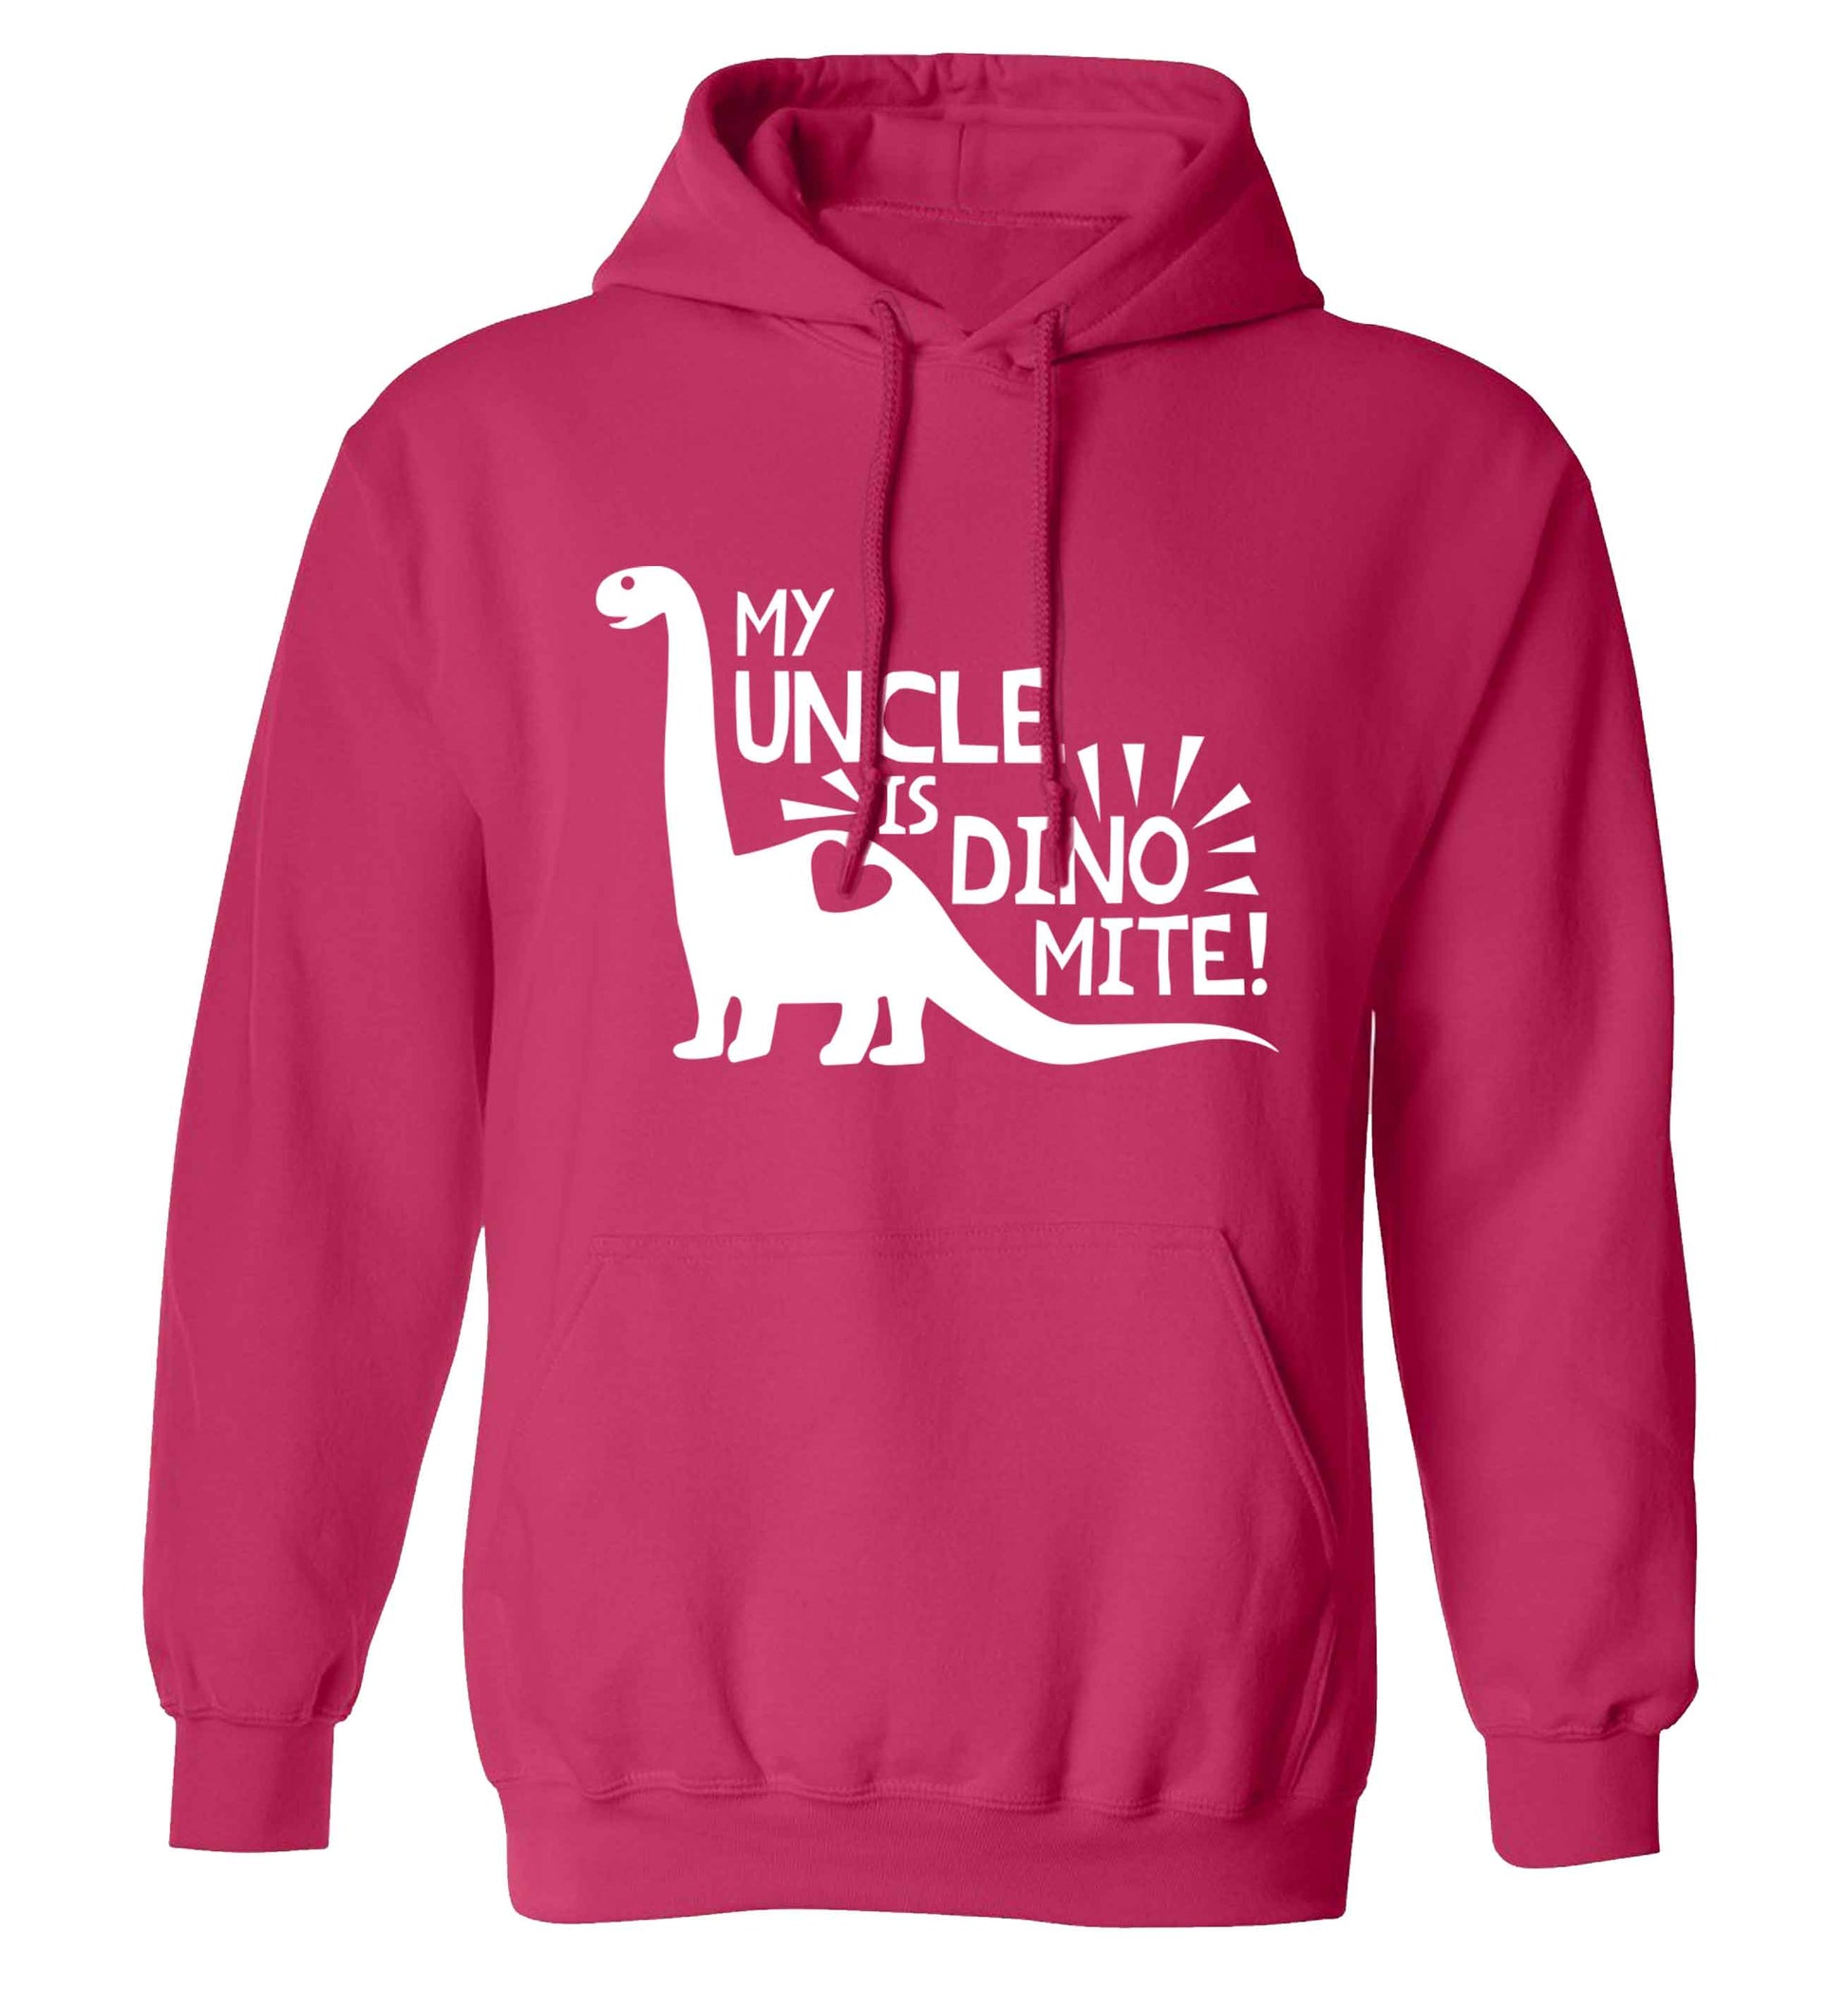 My uncle is dinomite! adults unisex pink hoodie 2XL